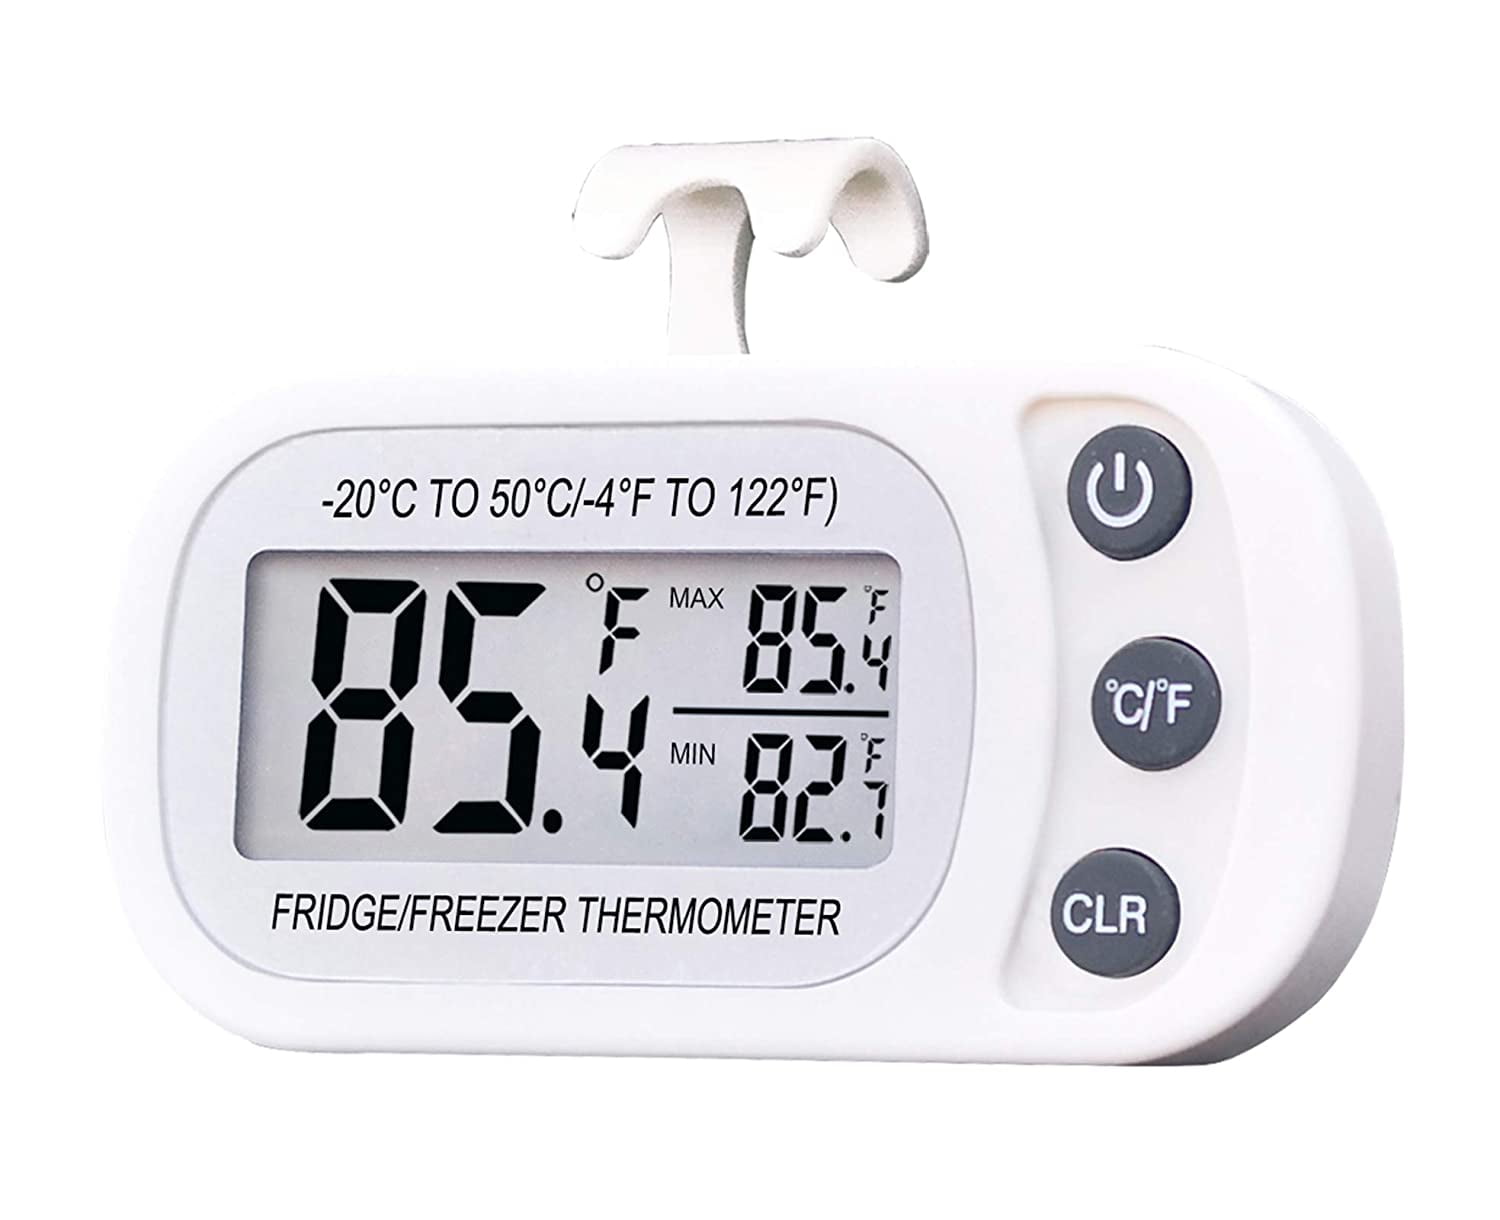 Fridge/Freezer Alarm Thermometer